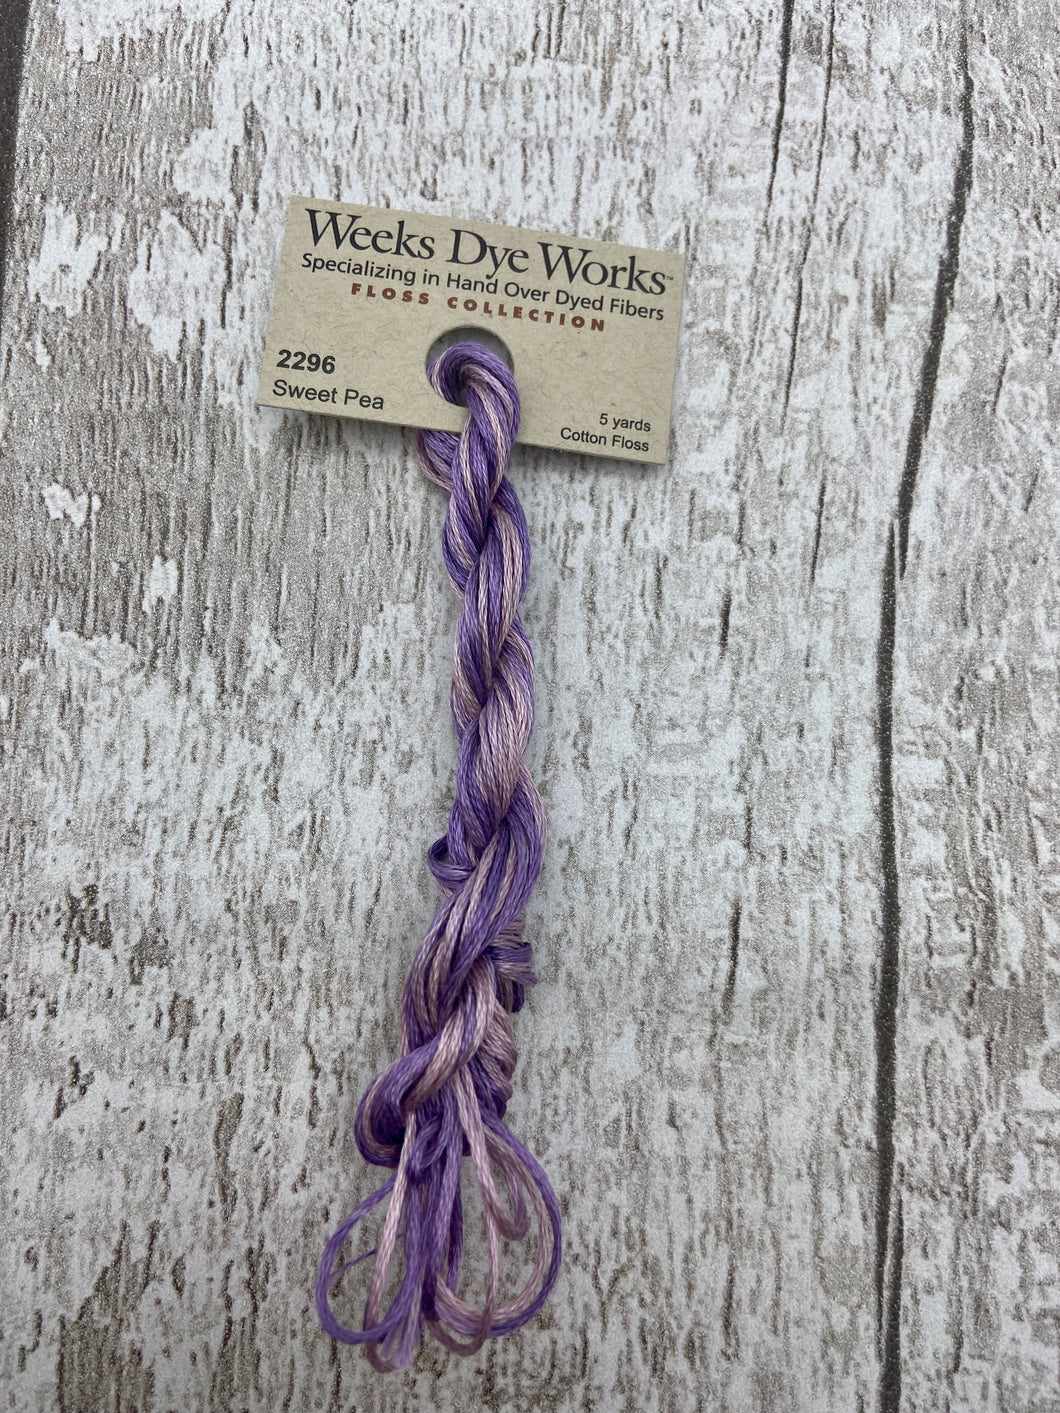 Sweet Pea (#2296) Weeks Dye Works 6-strand cotton floss